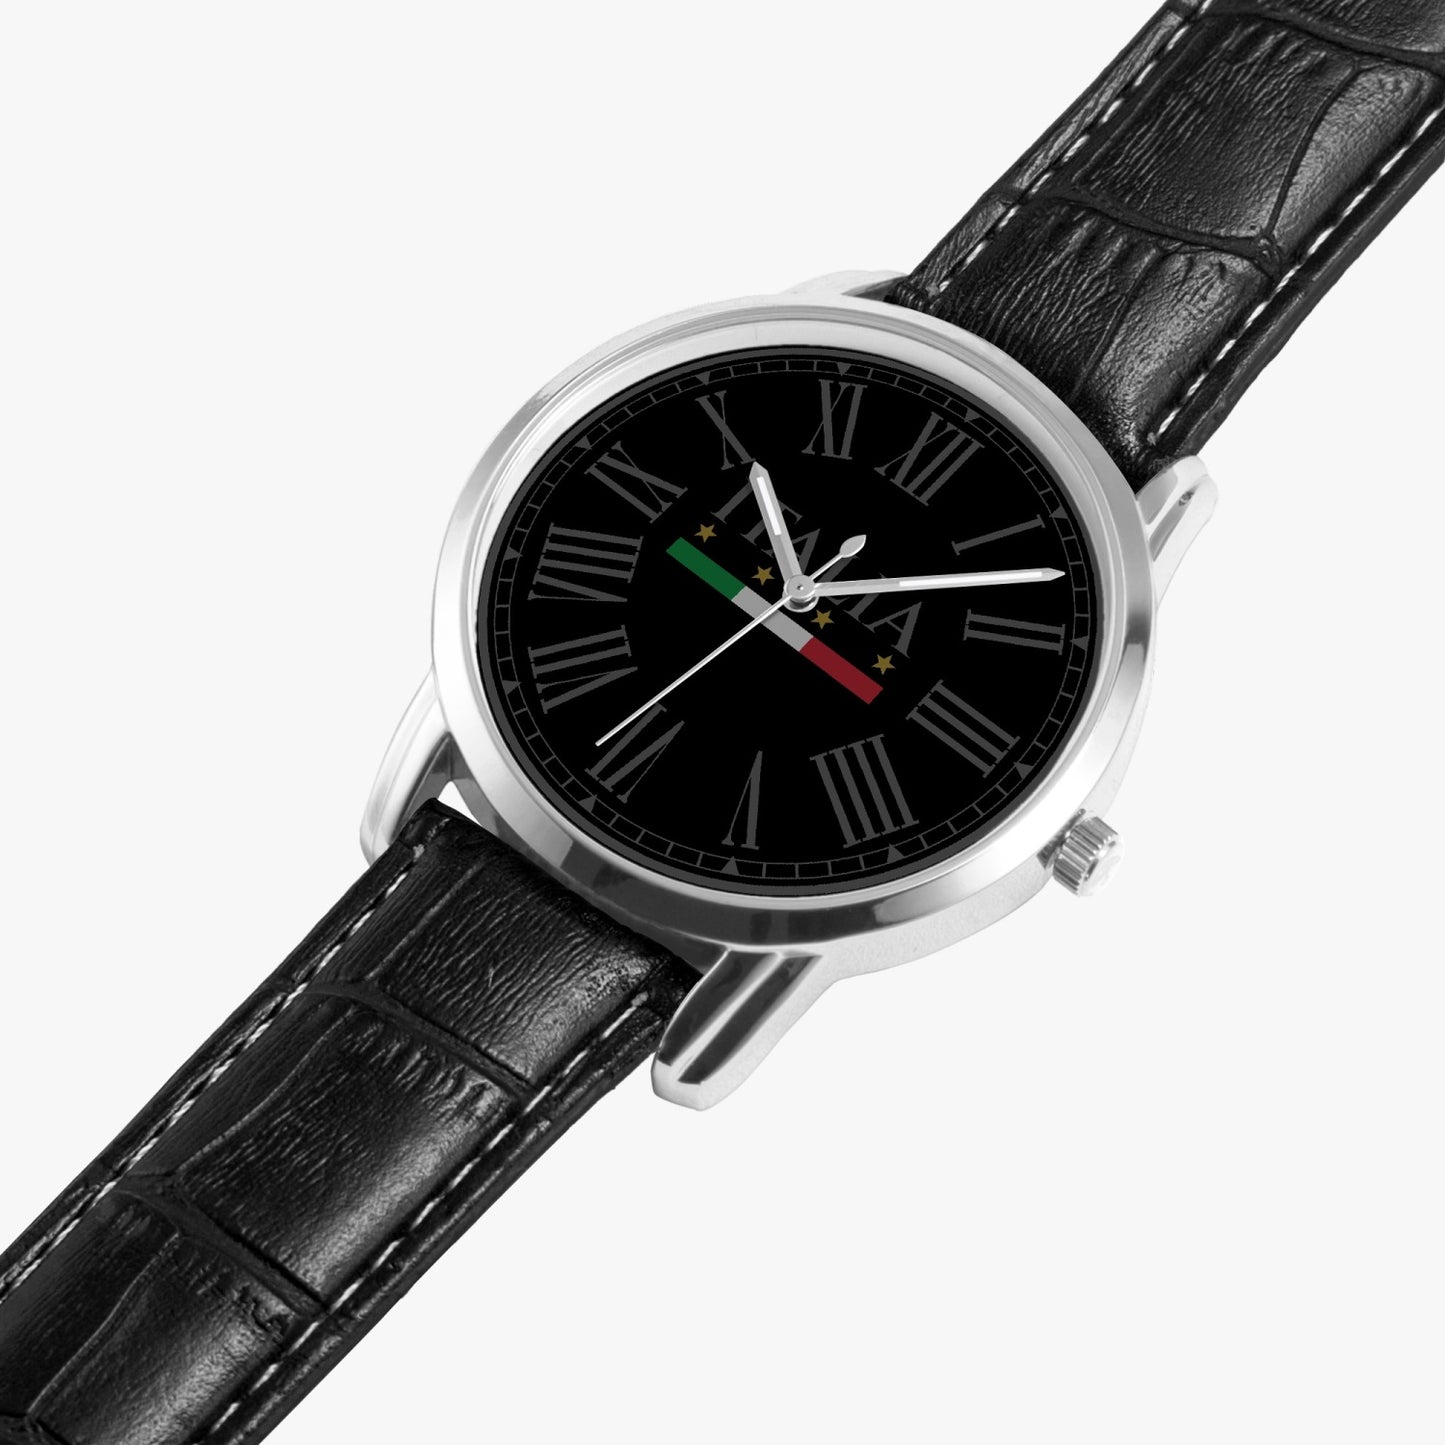 Quartz watch - Italy dark